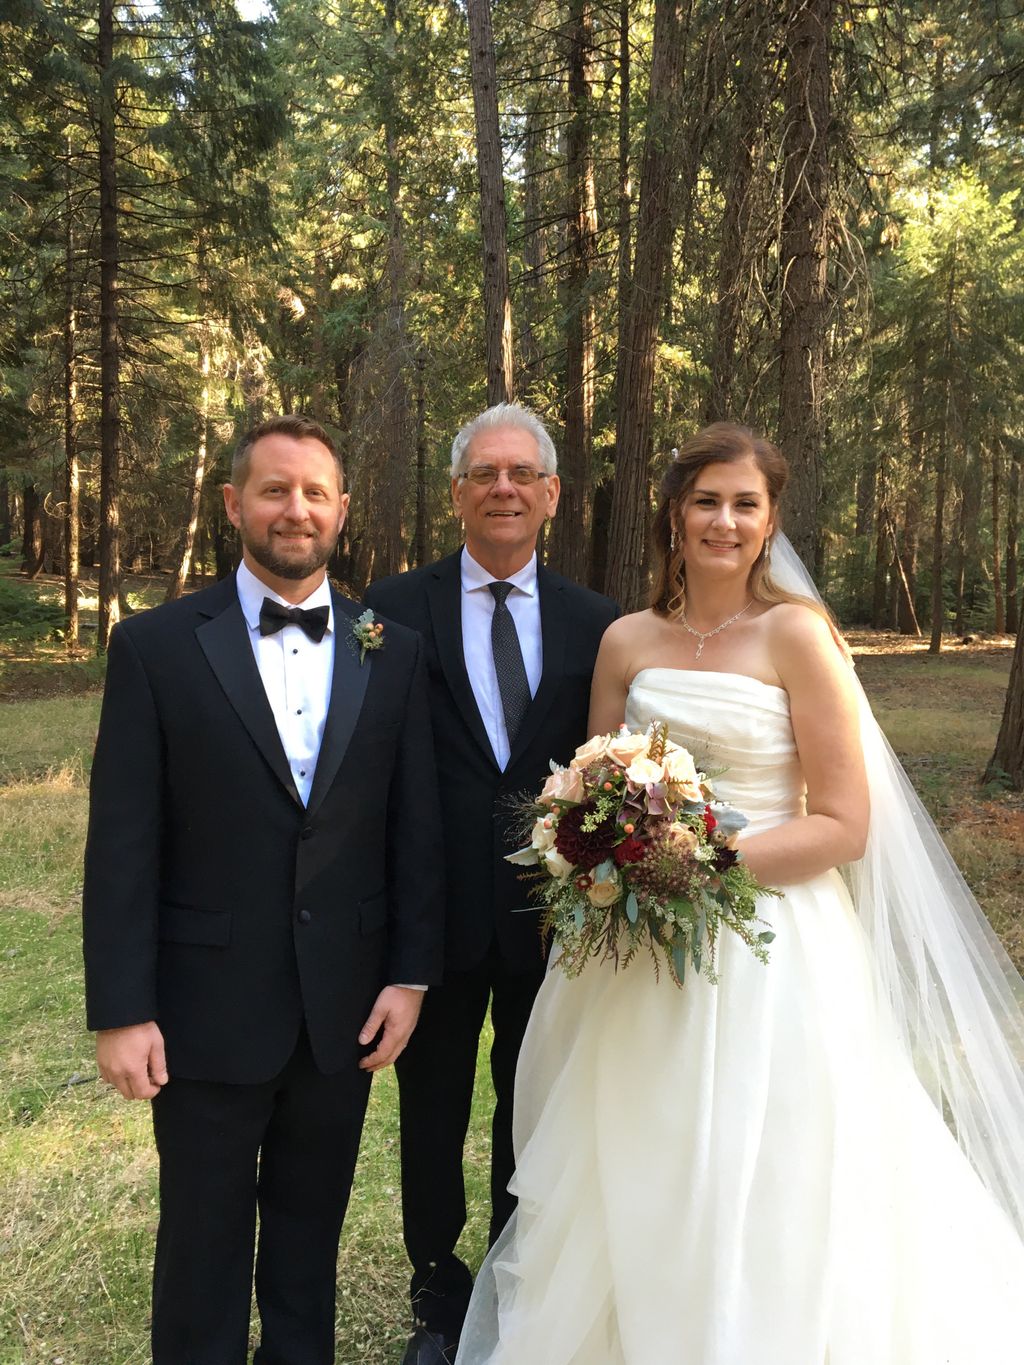 Sacramento Wedding Officiant, Ken Birks